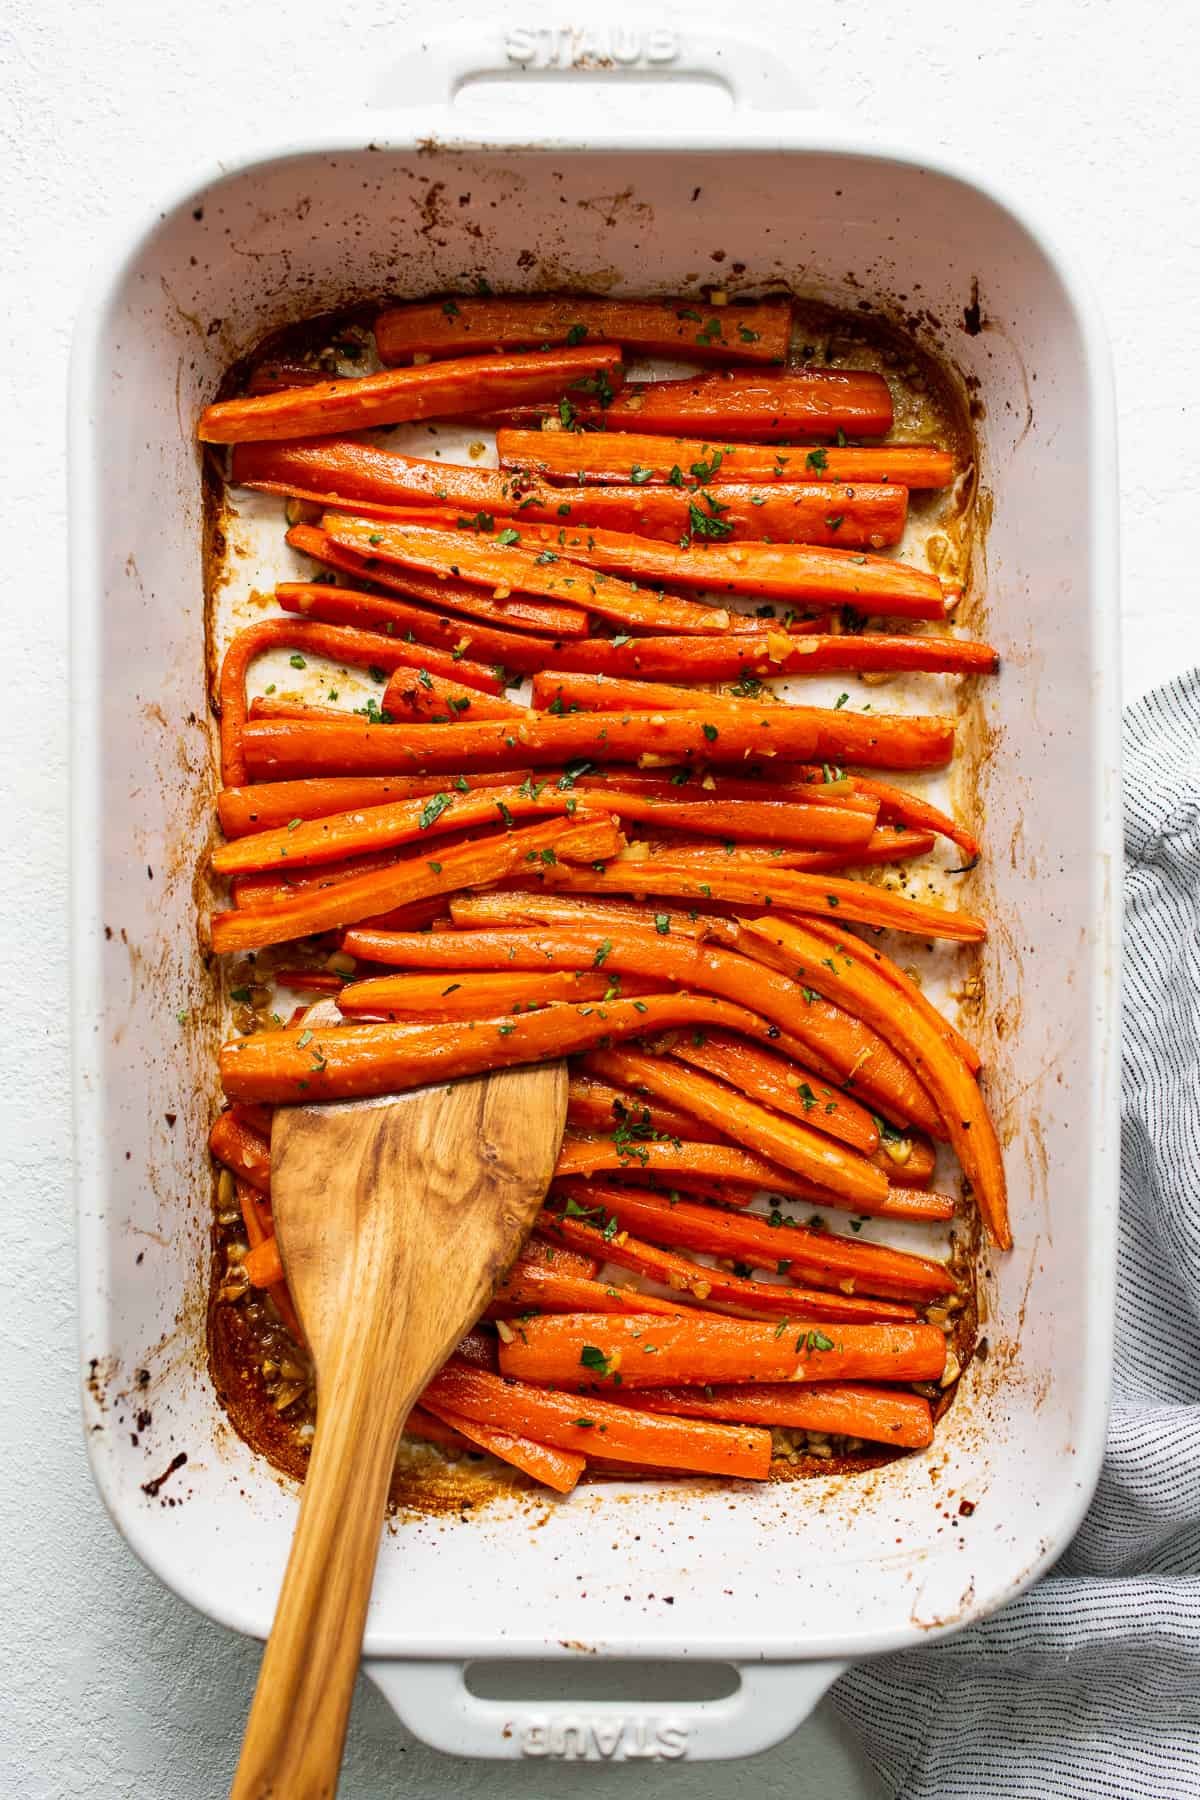 Garlic glazed carrots in a casserole dish.